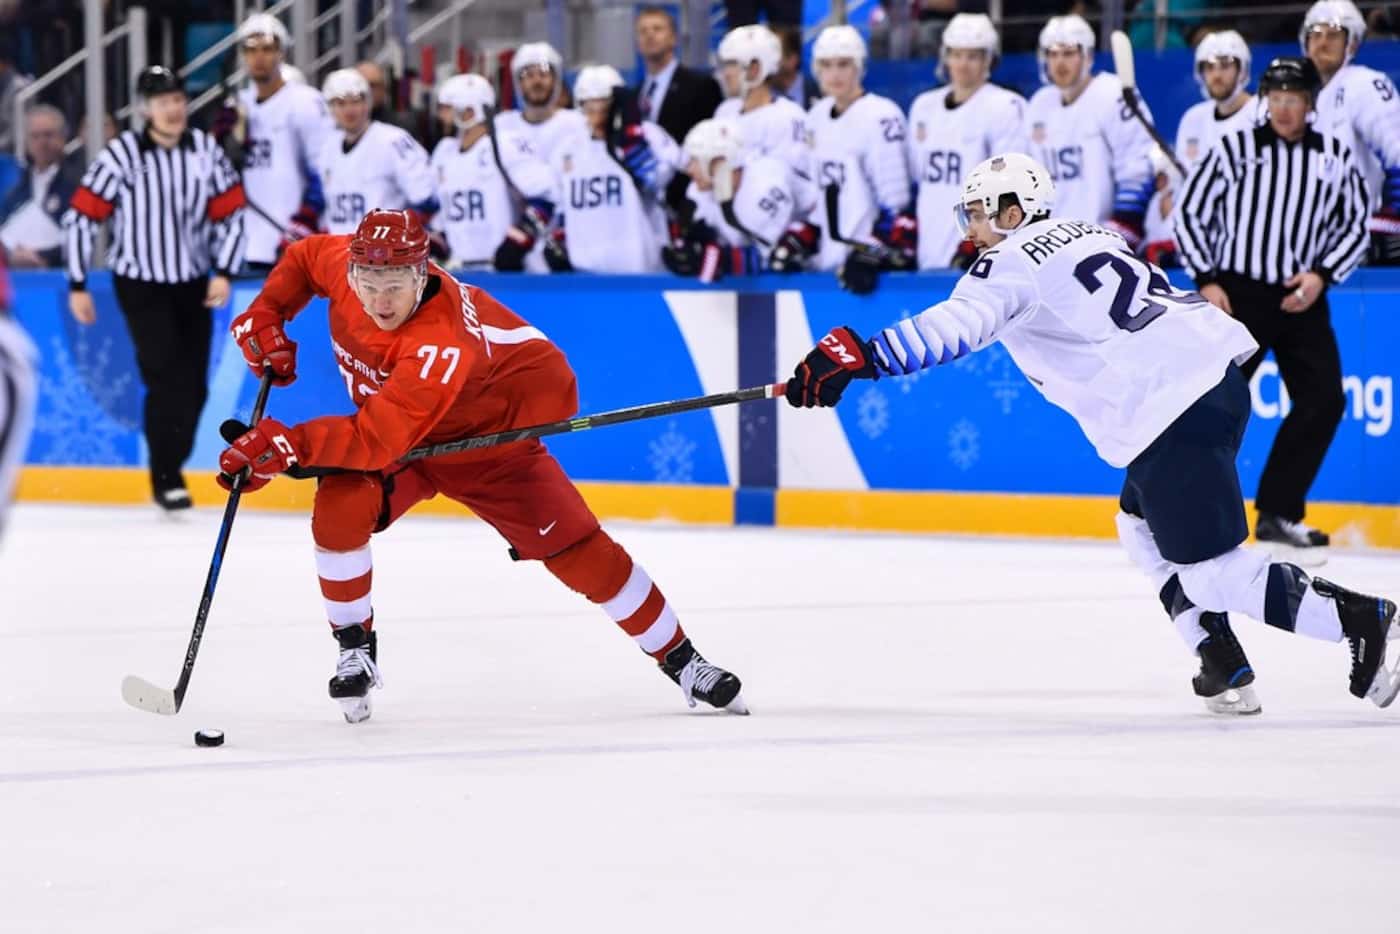 Russia's Kirill Kaprizov and USA's Mark Arcobello vie for the puck in the men's ice hockey...